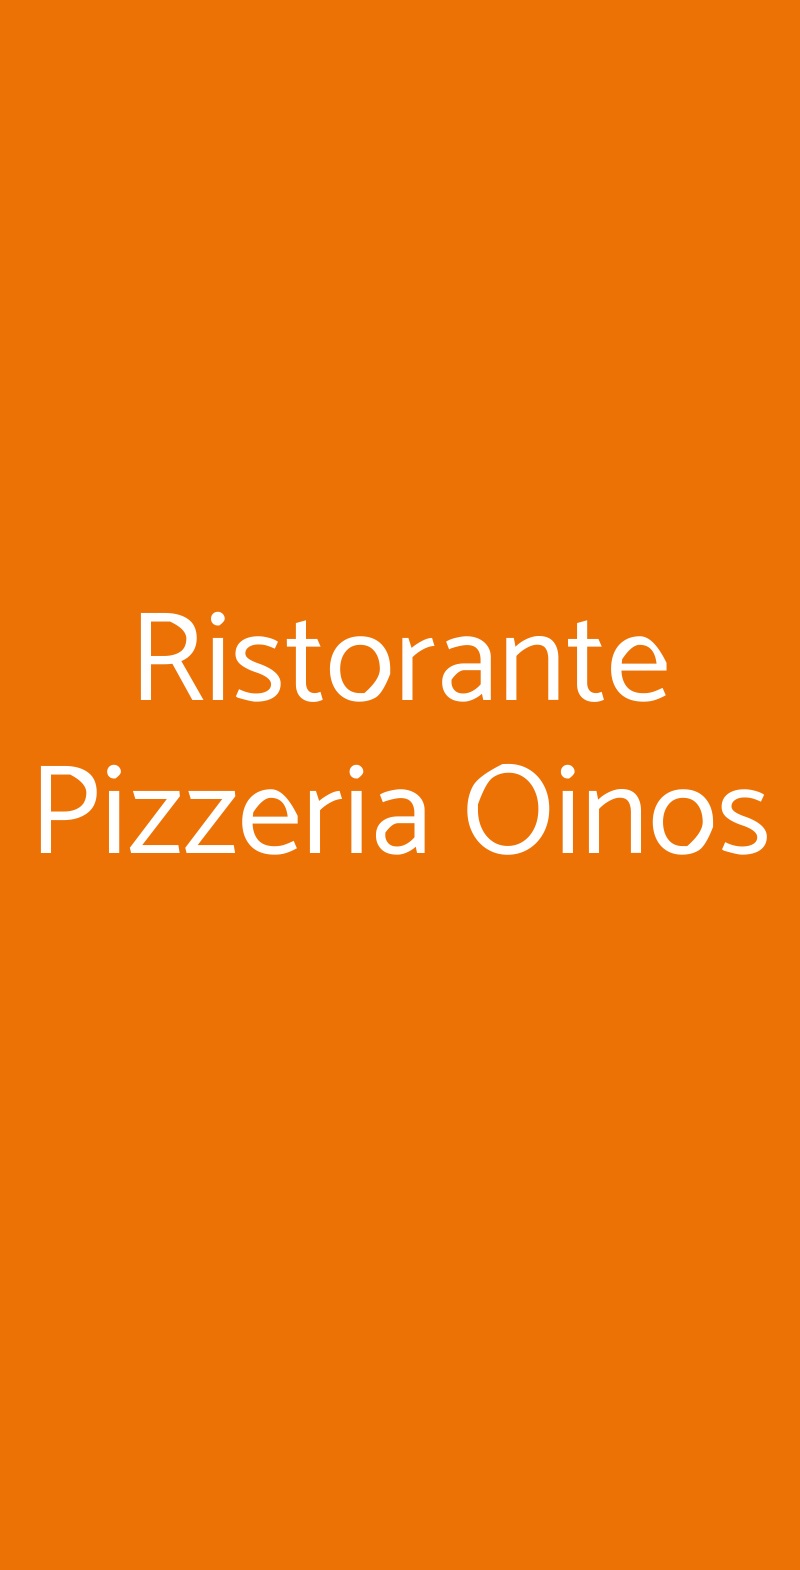 Ristorante Pizzeria Oinos Firenze menù 1 pagina